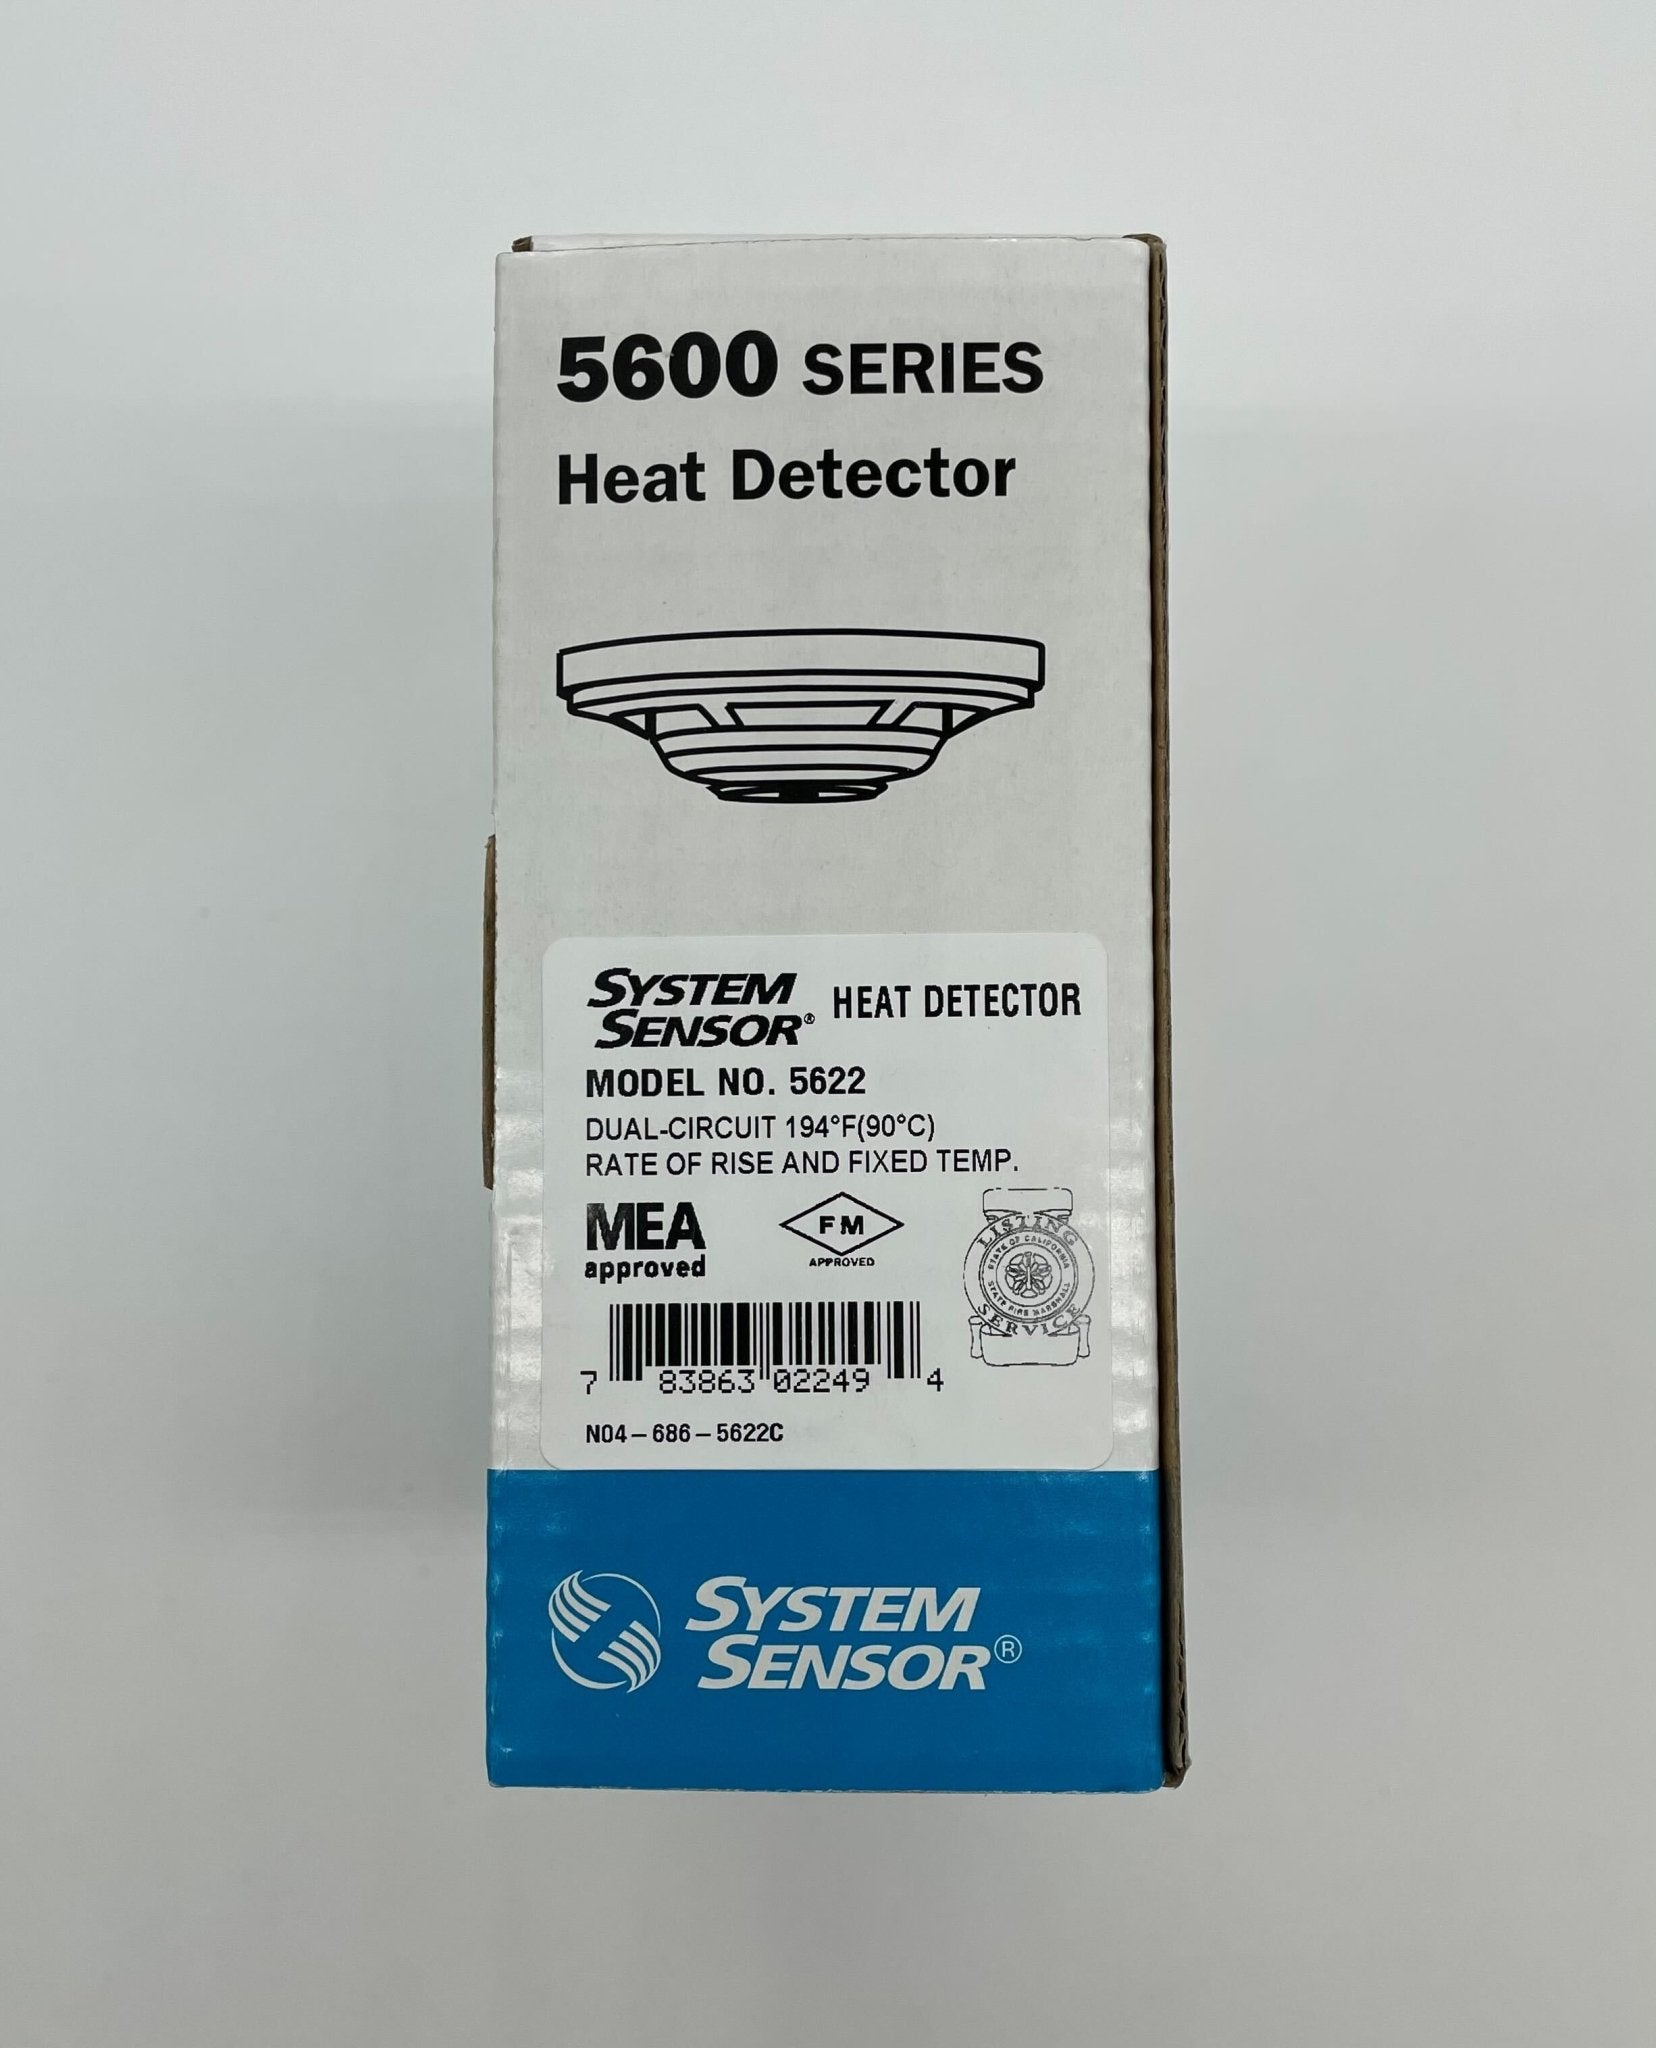 System Sensor 5622 - The Fire Alarm Supplier